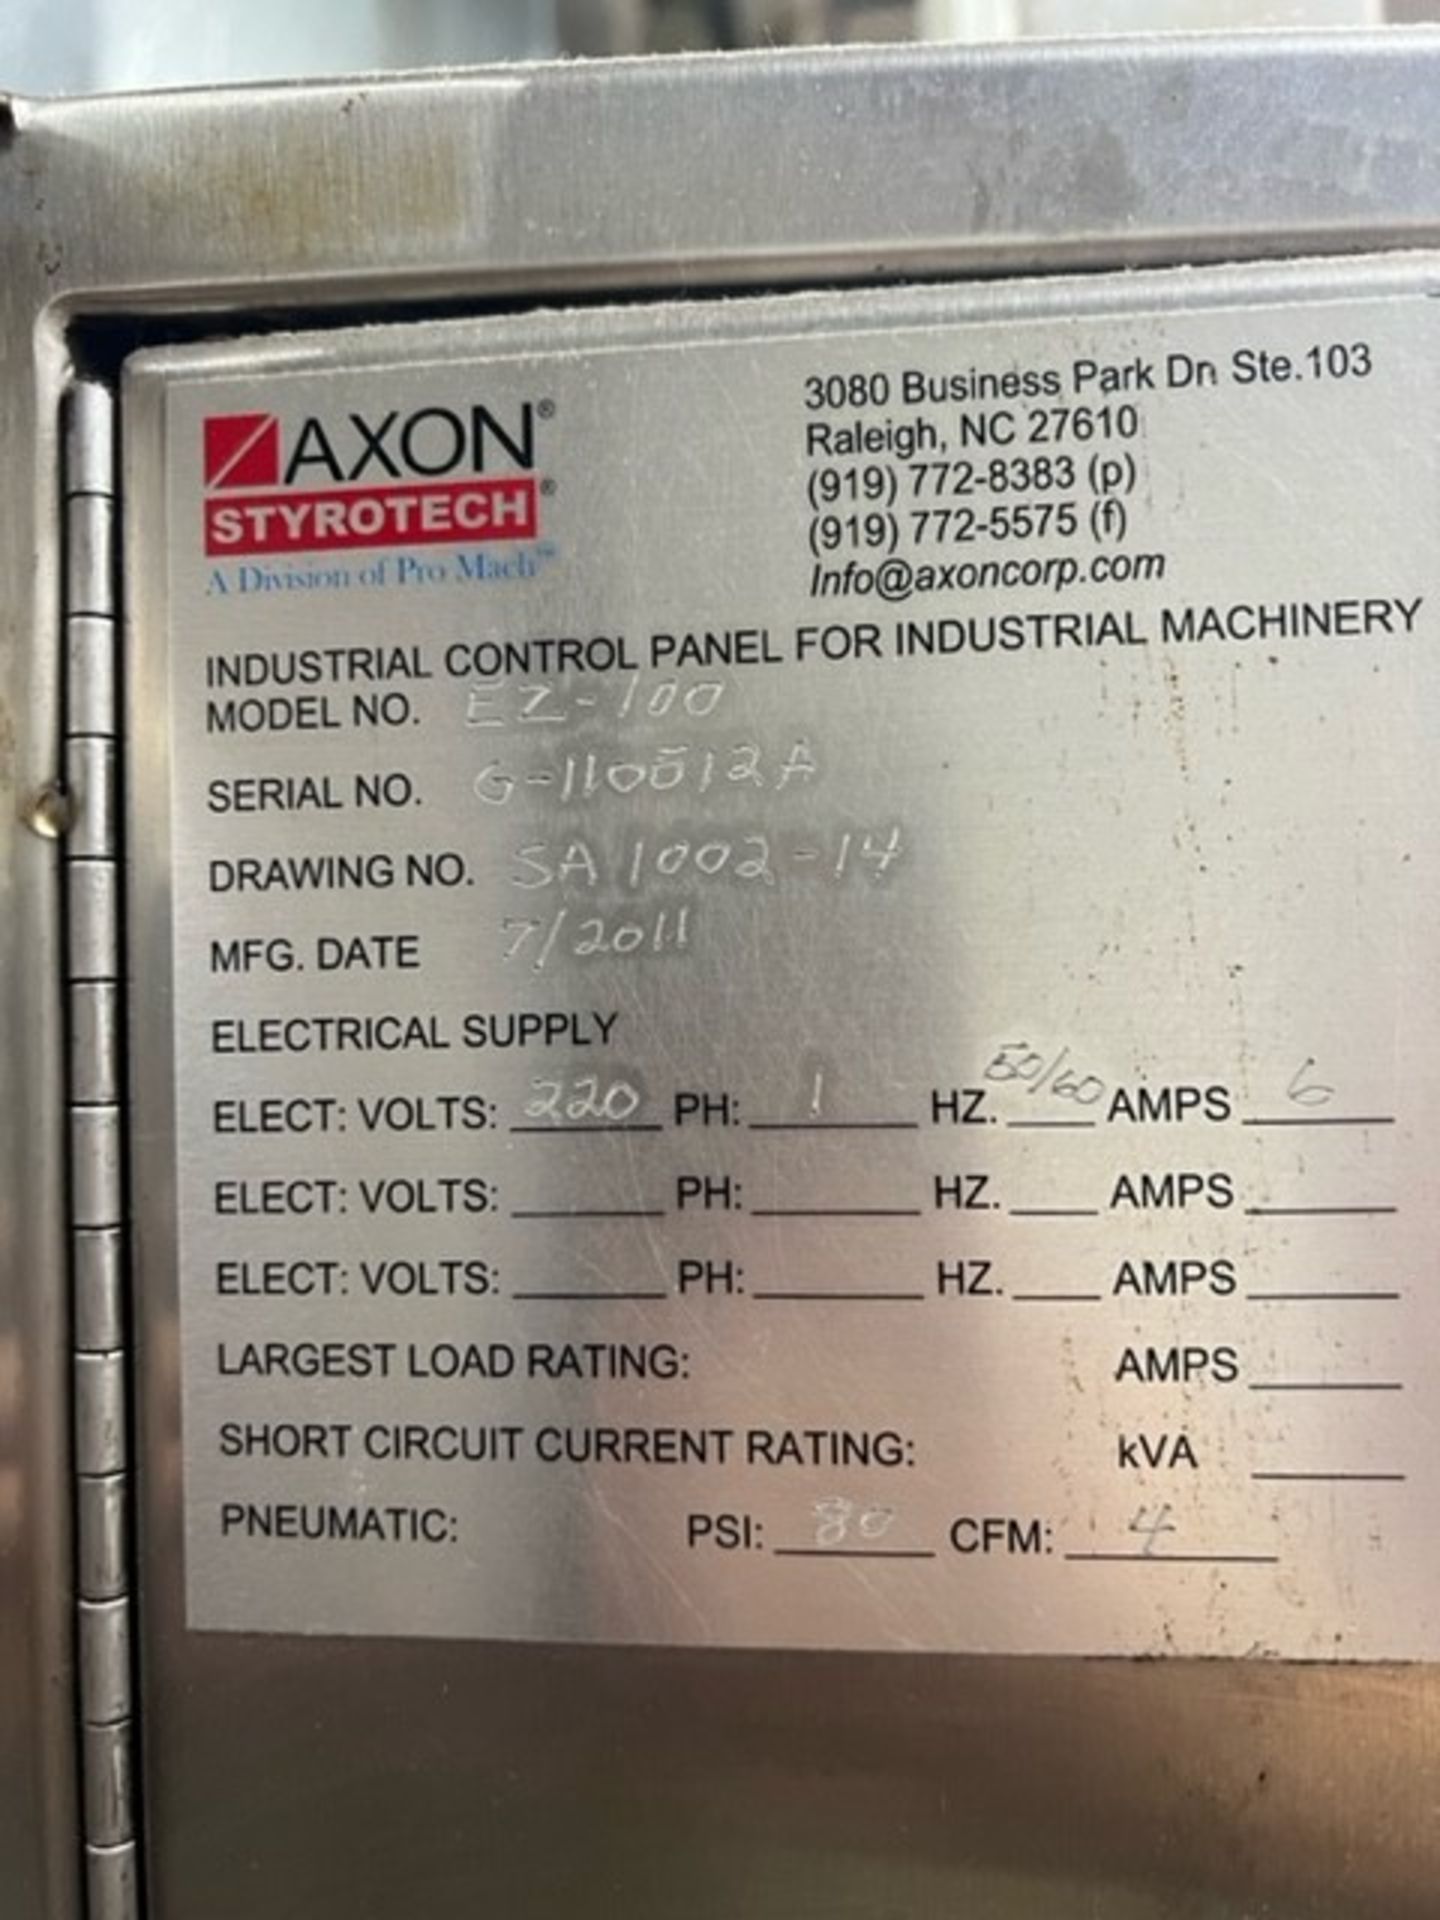 Axon EZ-Seal Tamper Band Applicator, Model EZ100 (Skid Fee $300) (Located Dayton, OH) - Image 2 of 2